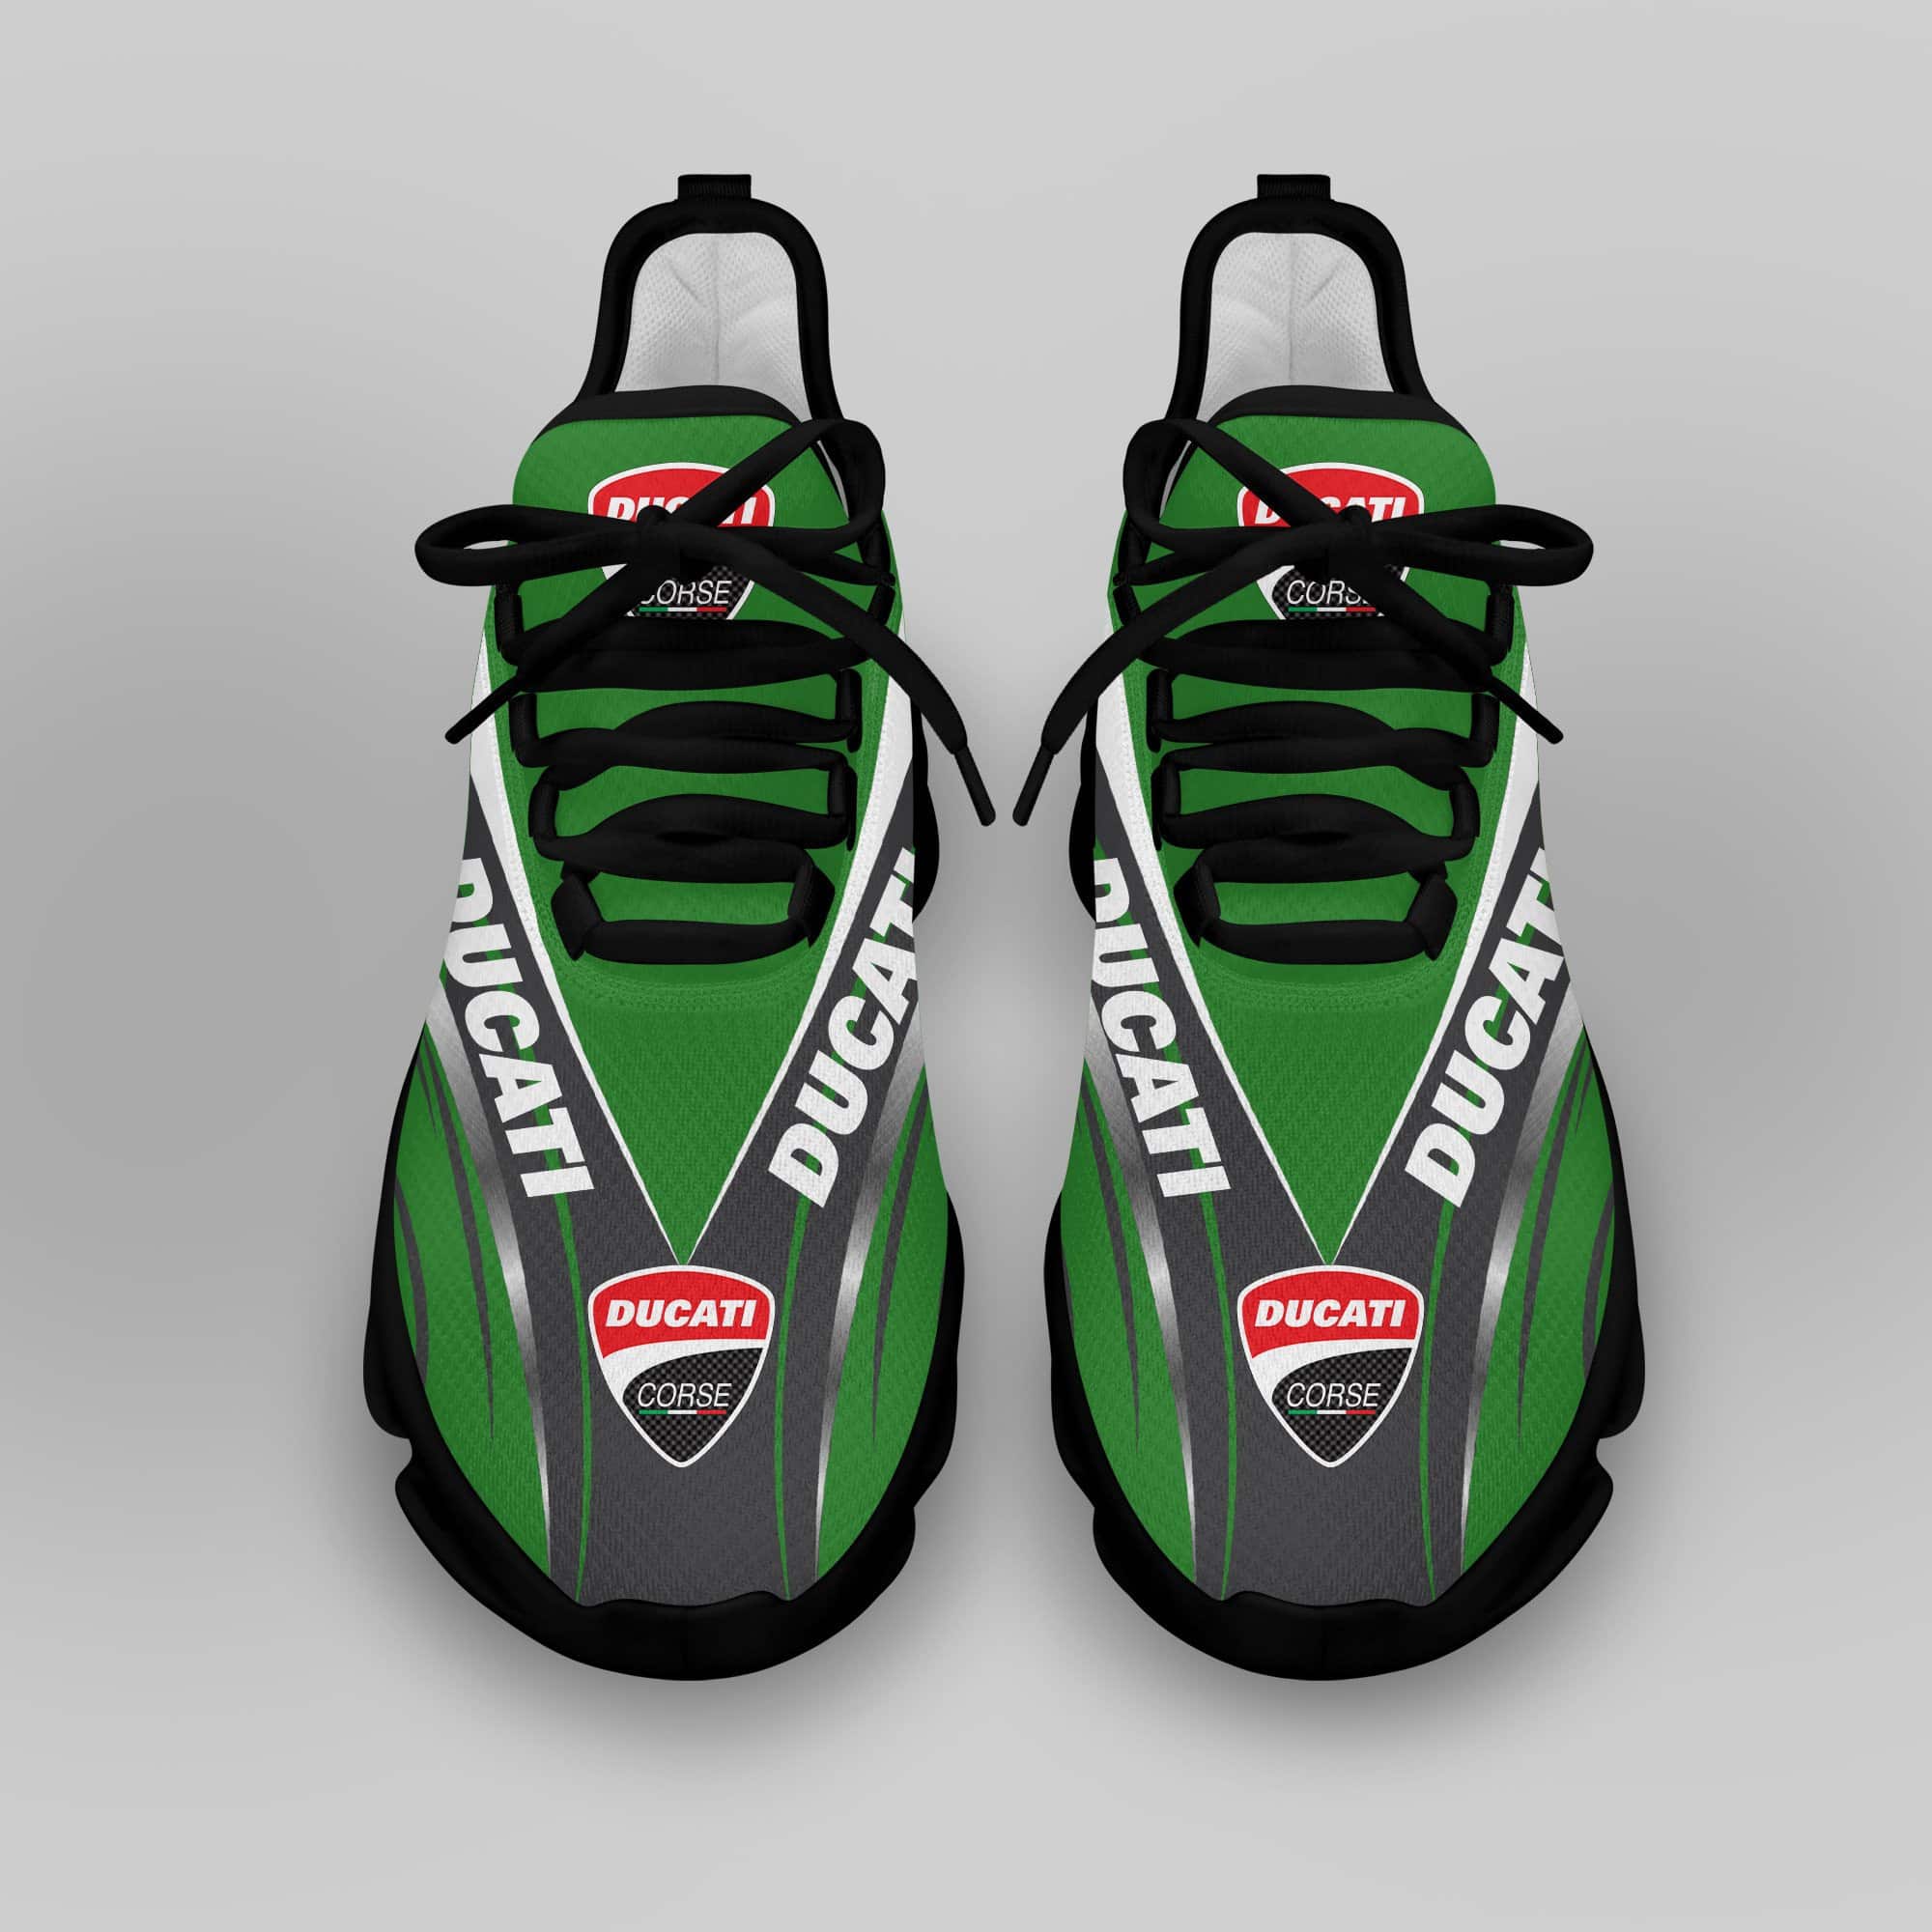 Ducati Racing Running Shoes Max Soul Shoes Sneakers Ver 54 4